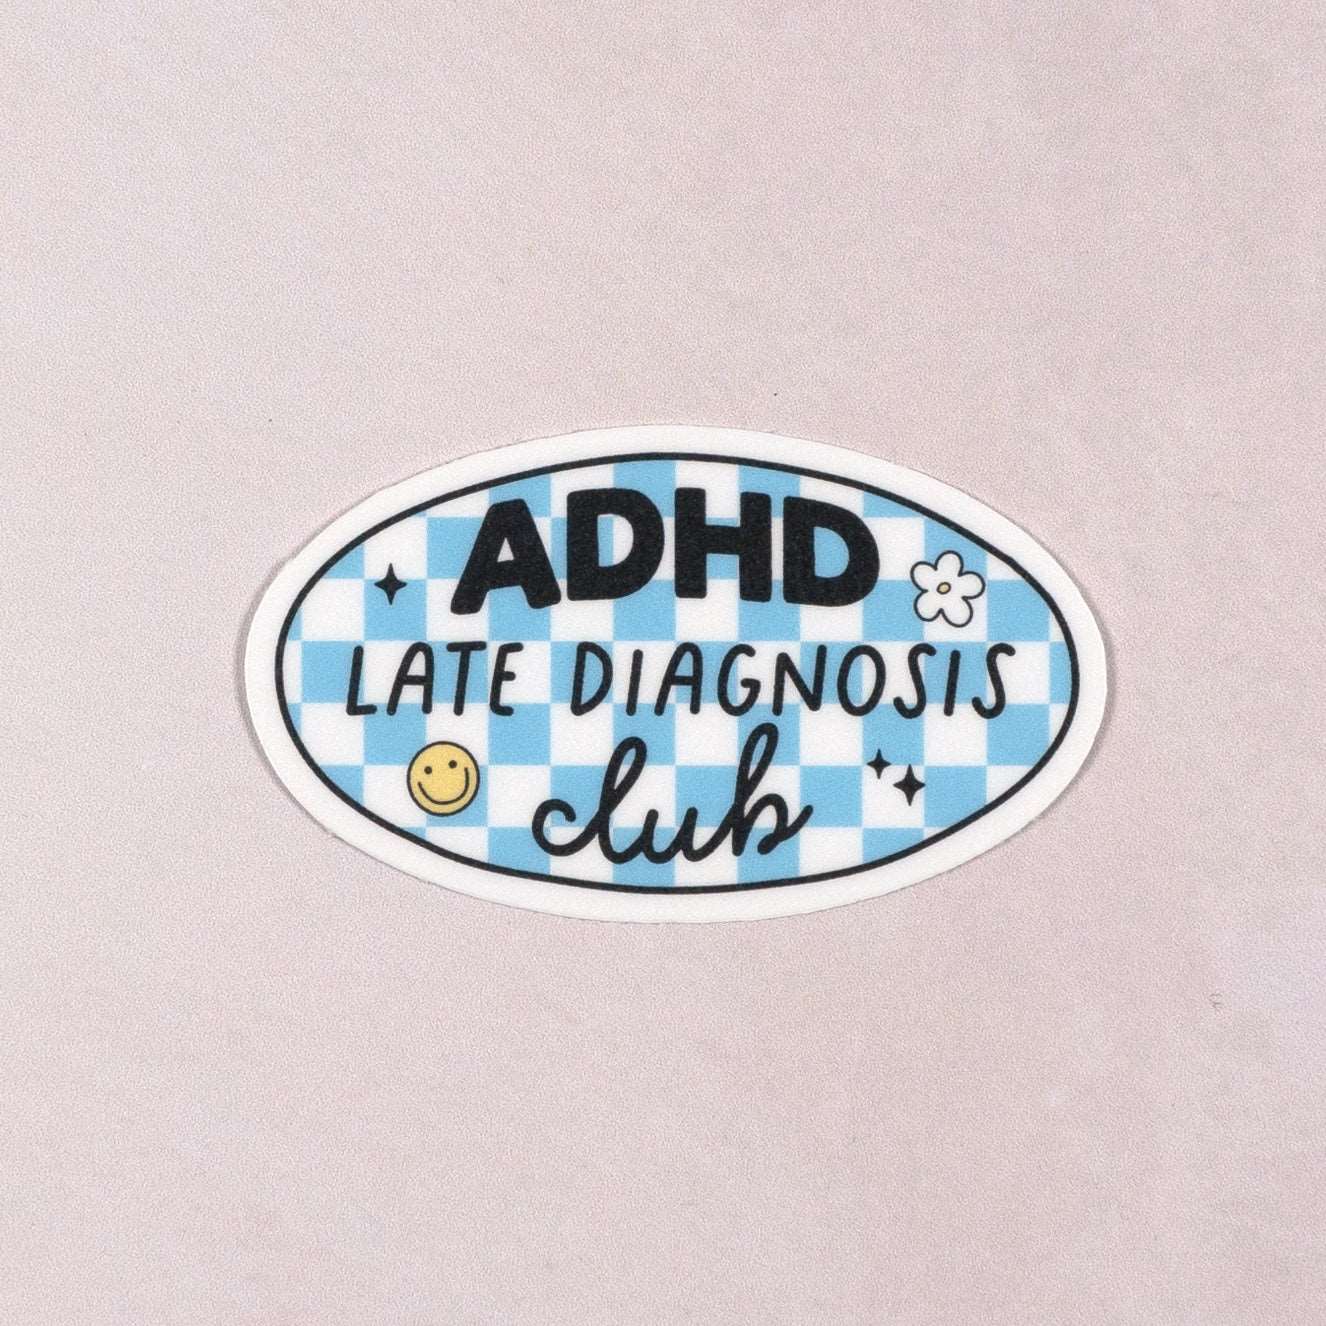 ADHD Late Diagnosis Club Die Cut Vinyl Sticker by Plannerface